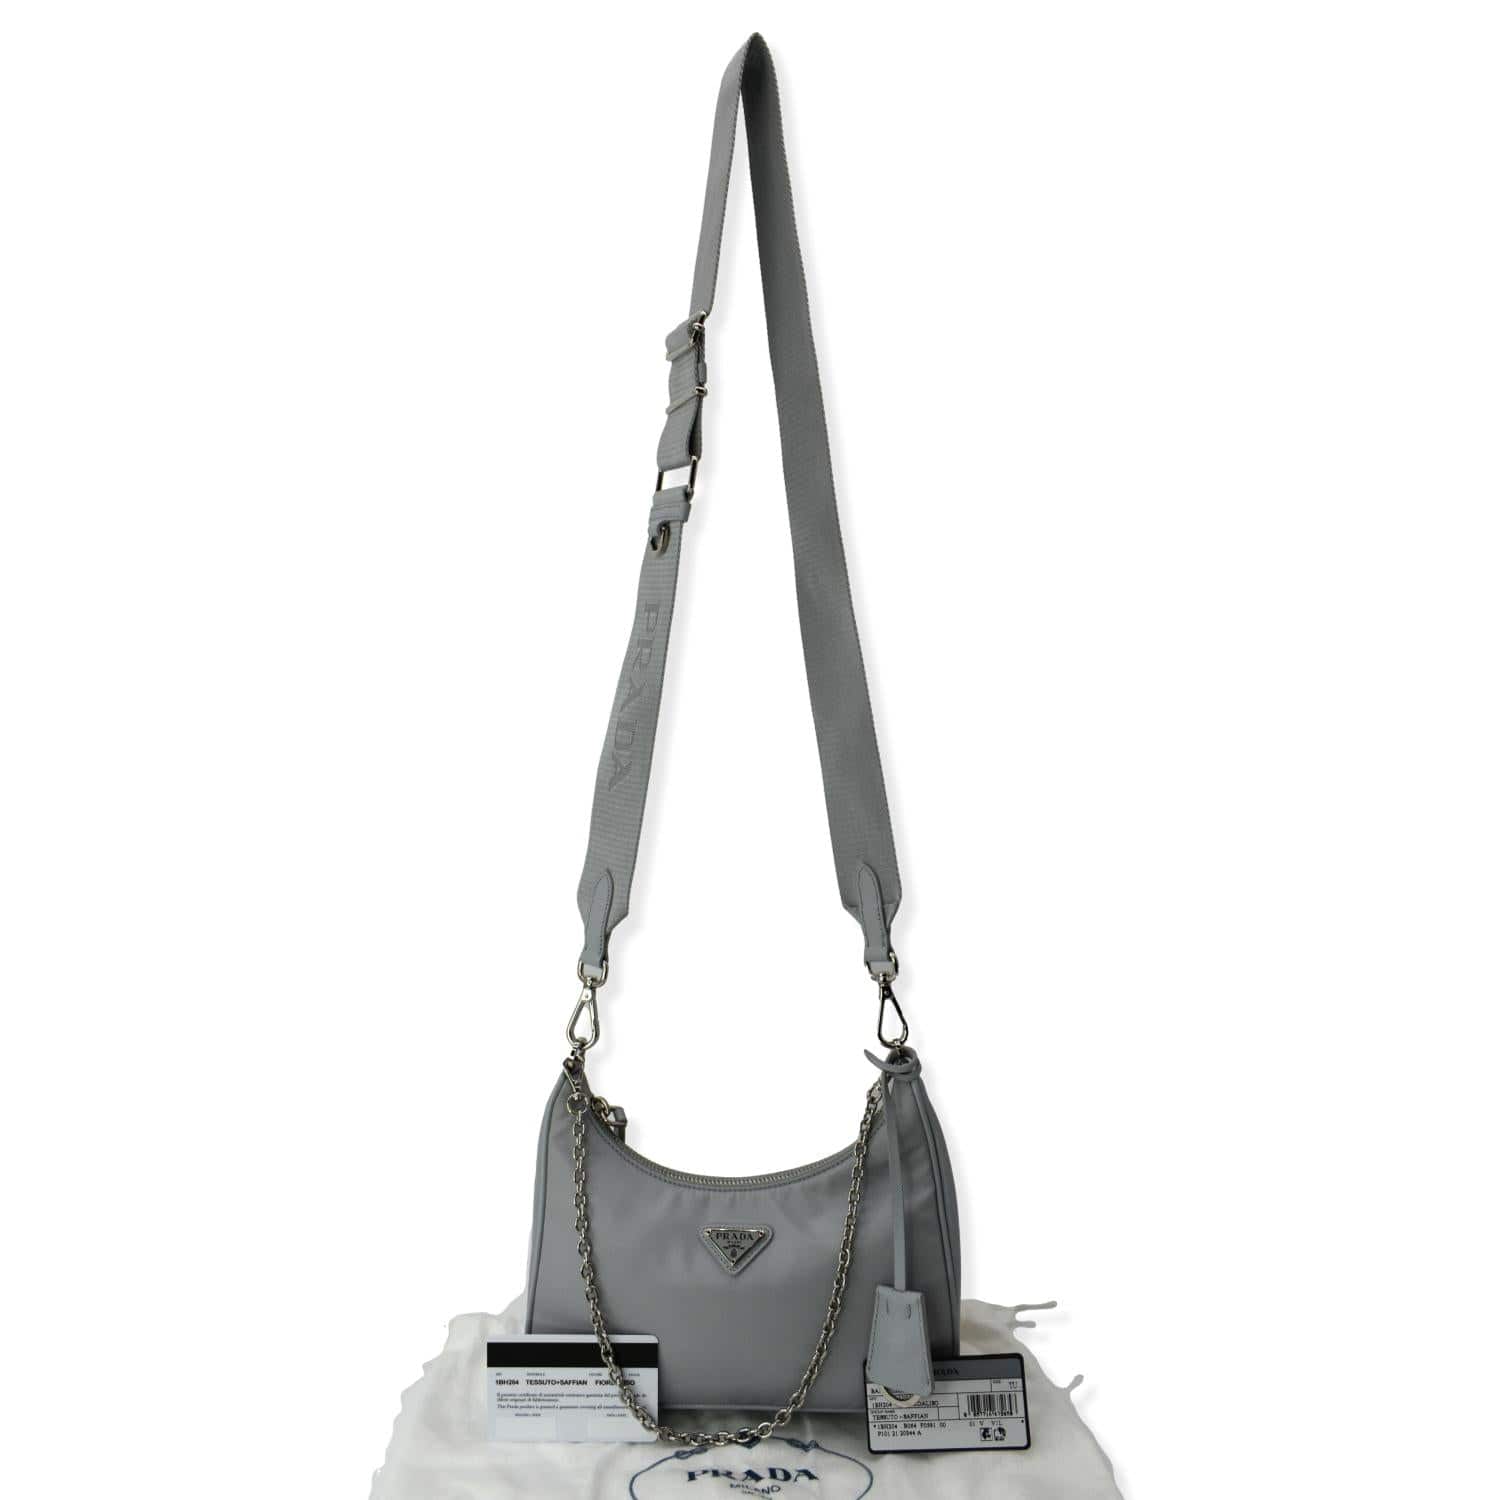 Prada Re-Edition 2005 Nylon Chain Shoulder Bag - ShopStyle